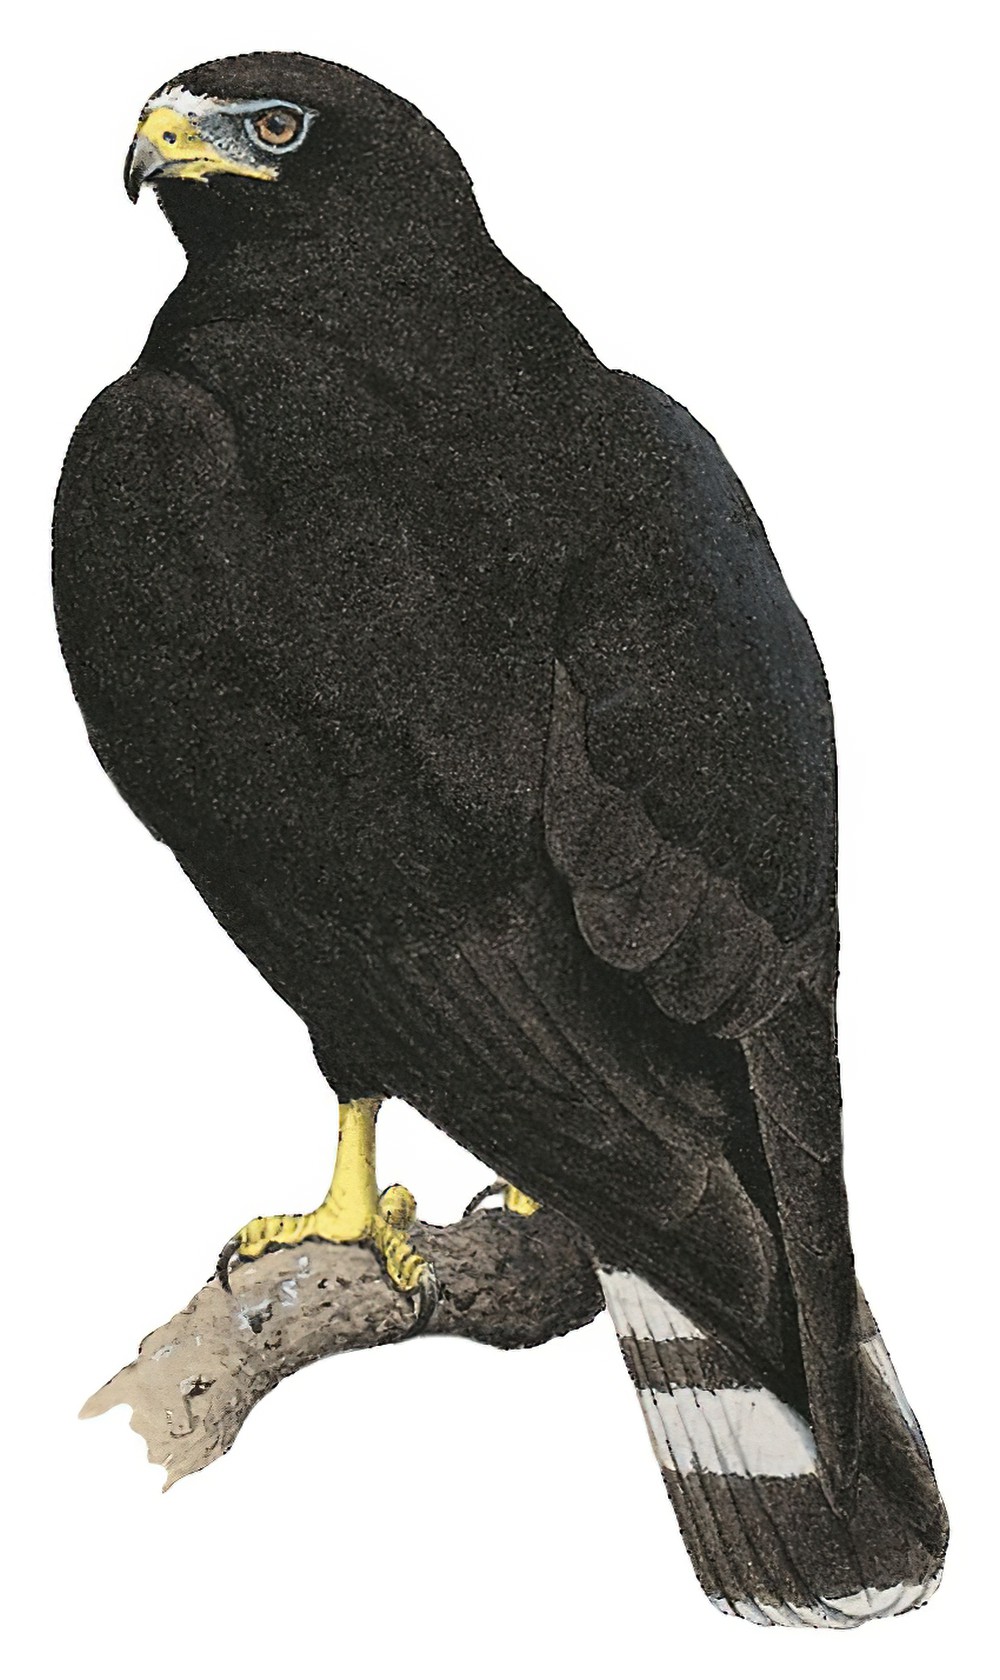 Zone-tailed Hawk / Buteo albonotatus